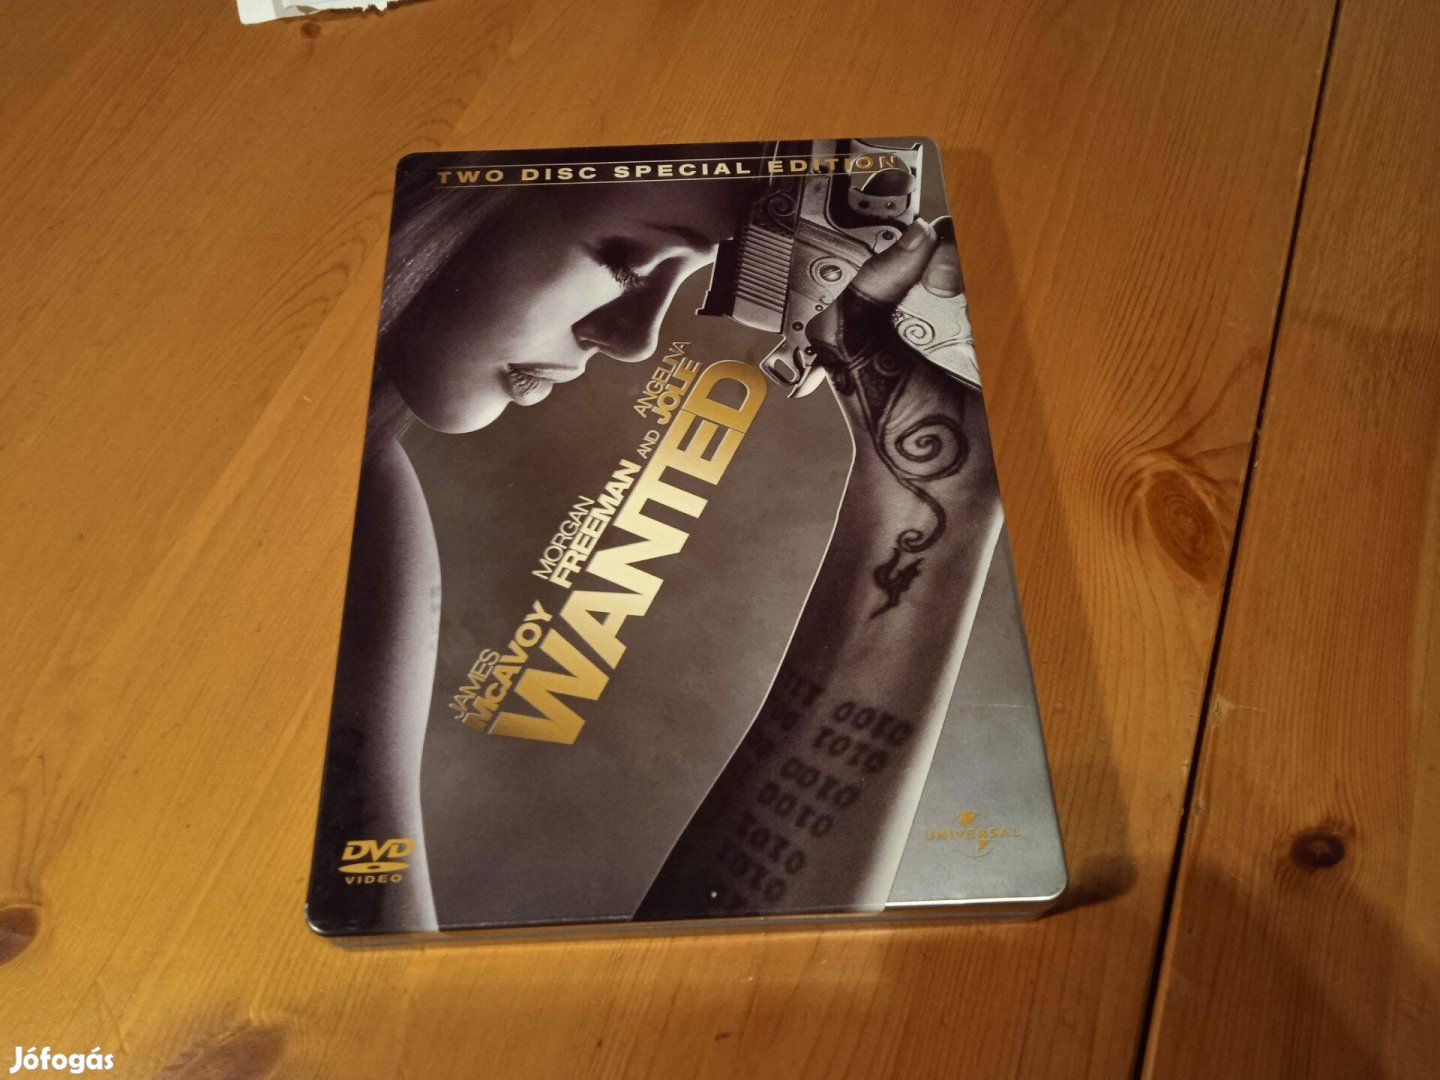 Wanted - eredeti, fémdobozos, dupla DVD